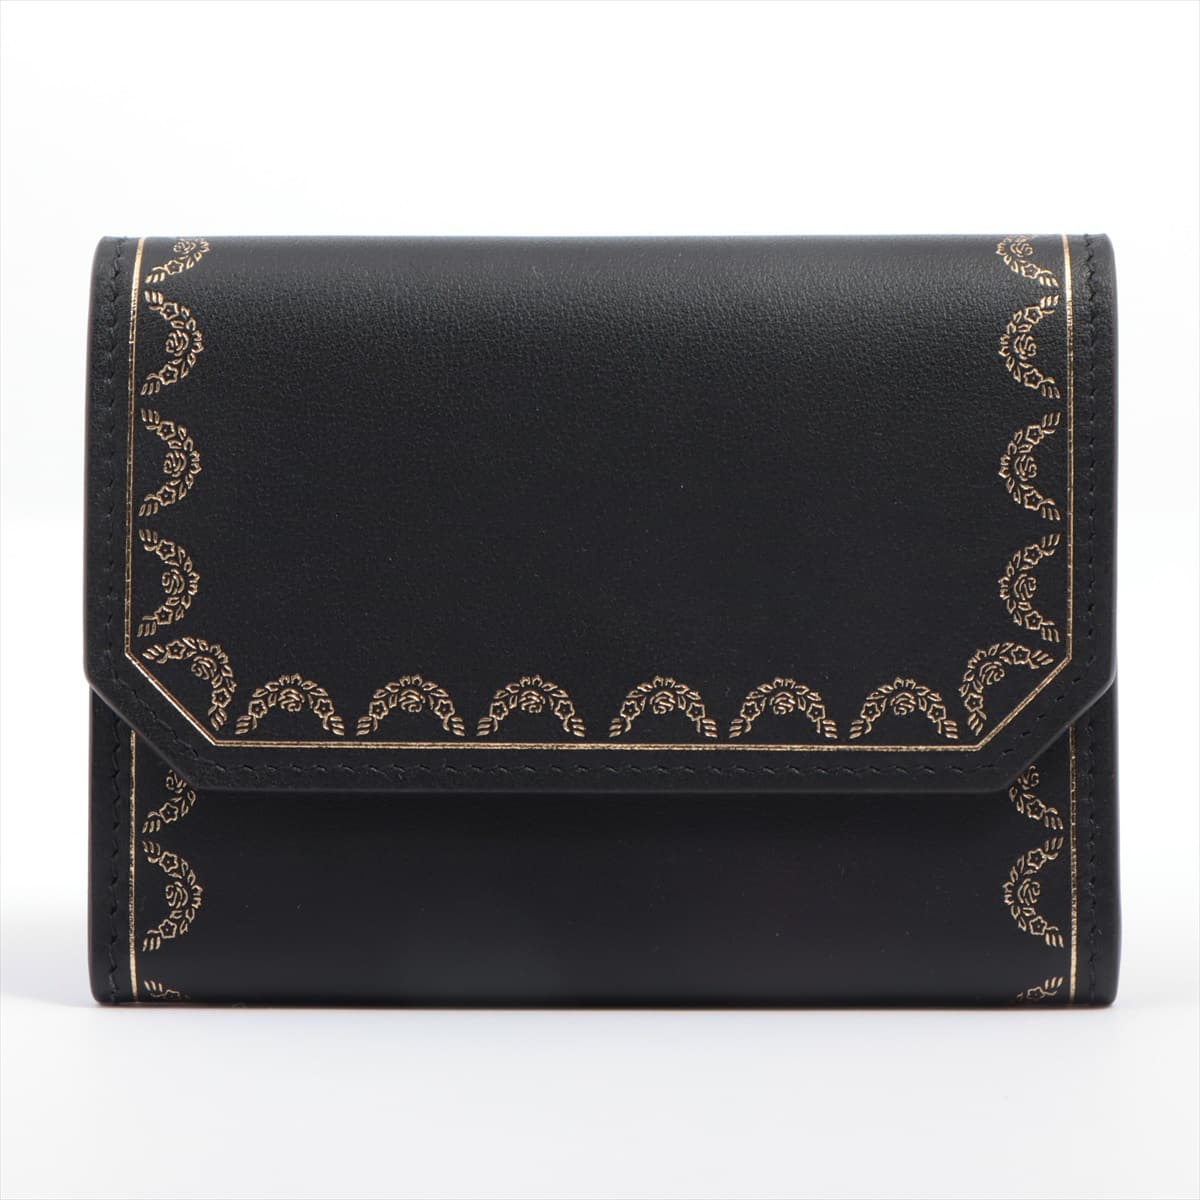 Cartier Garland Doo Cartier Leather Compact Wallet Black